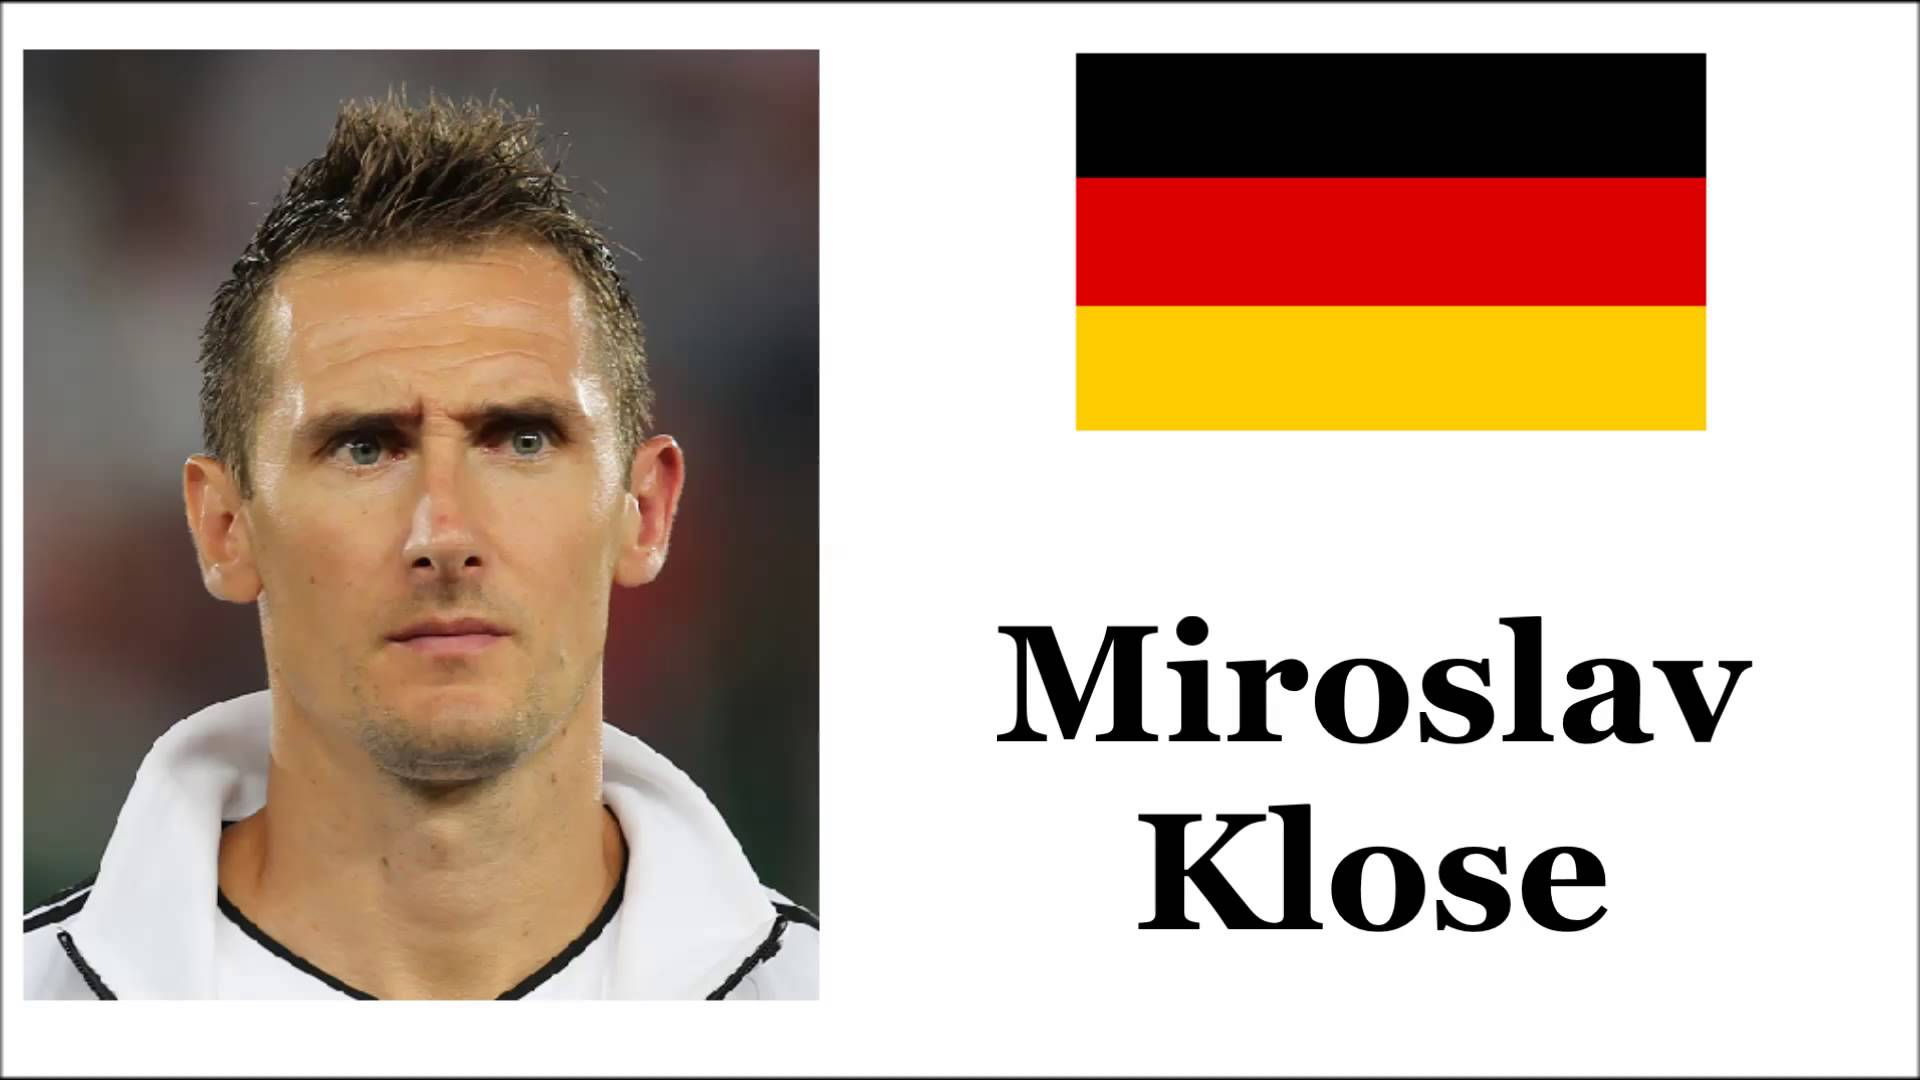 Amazing Miroslav Klose Pictures & Backgrounds